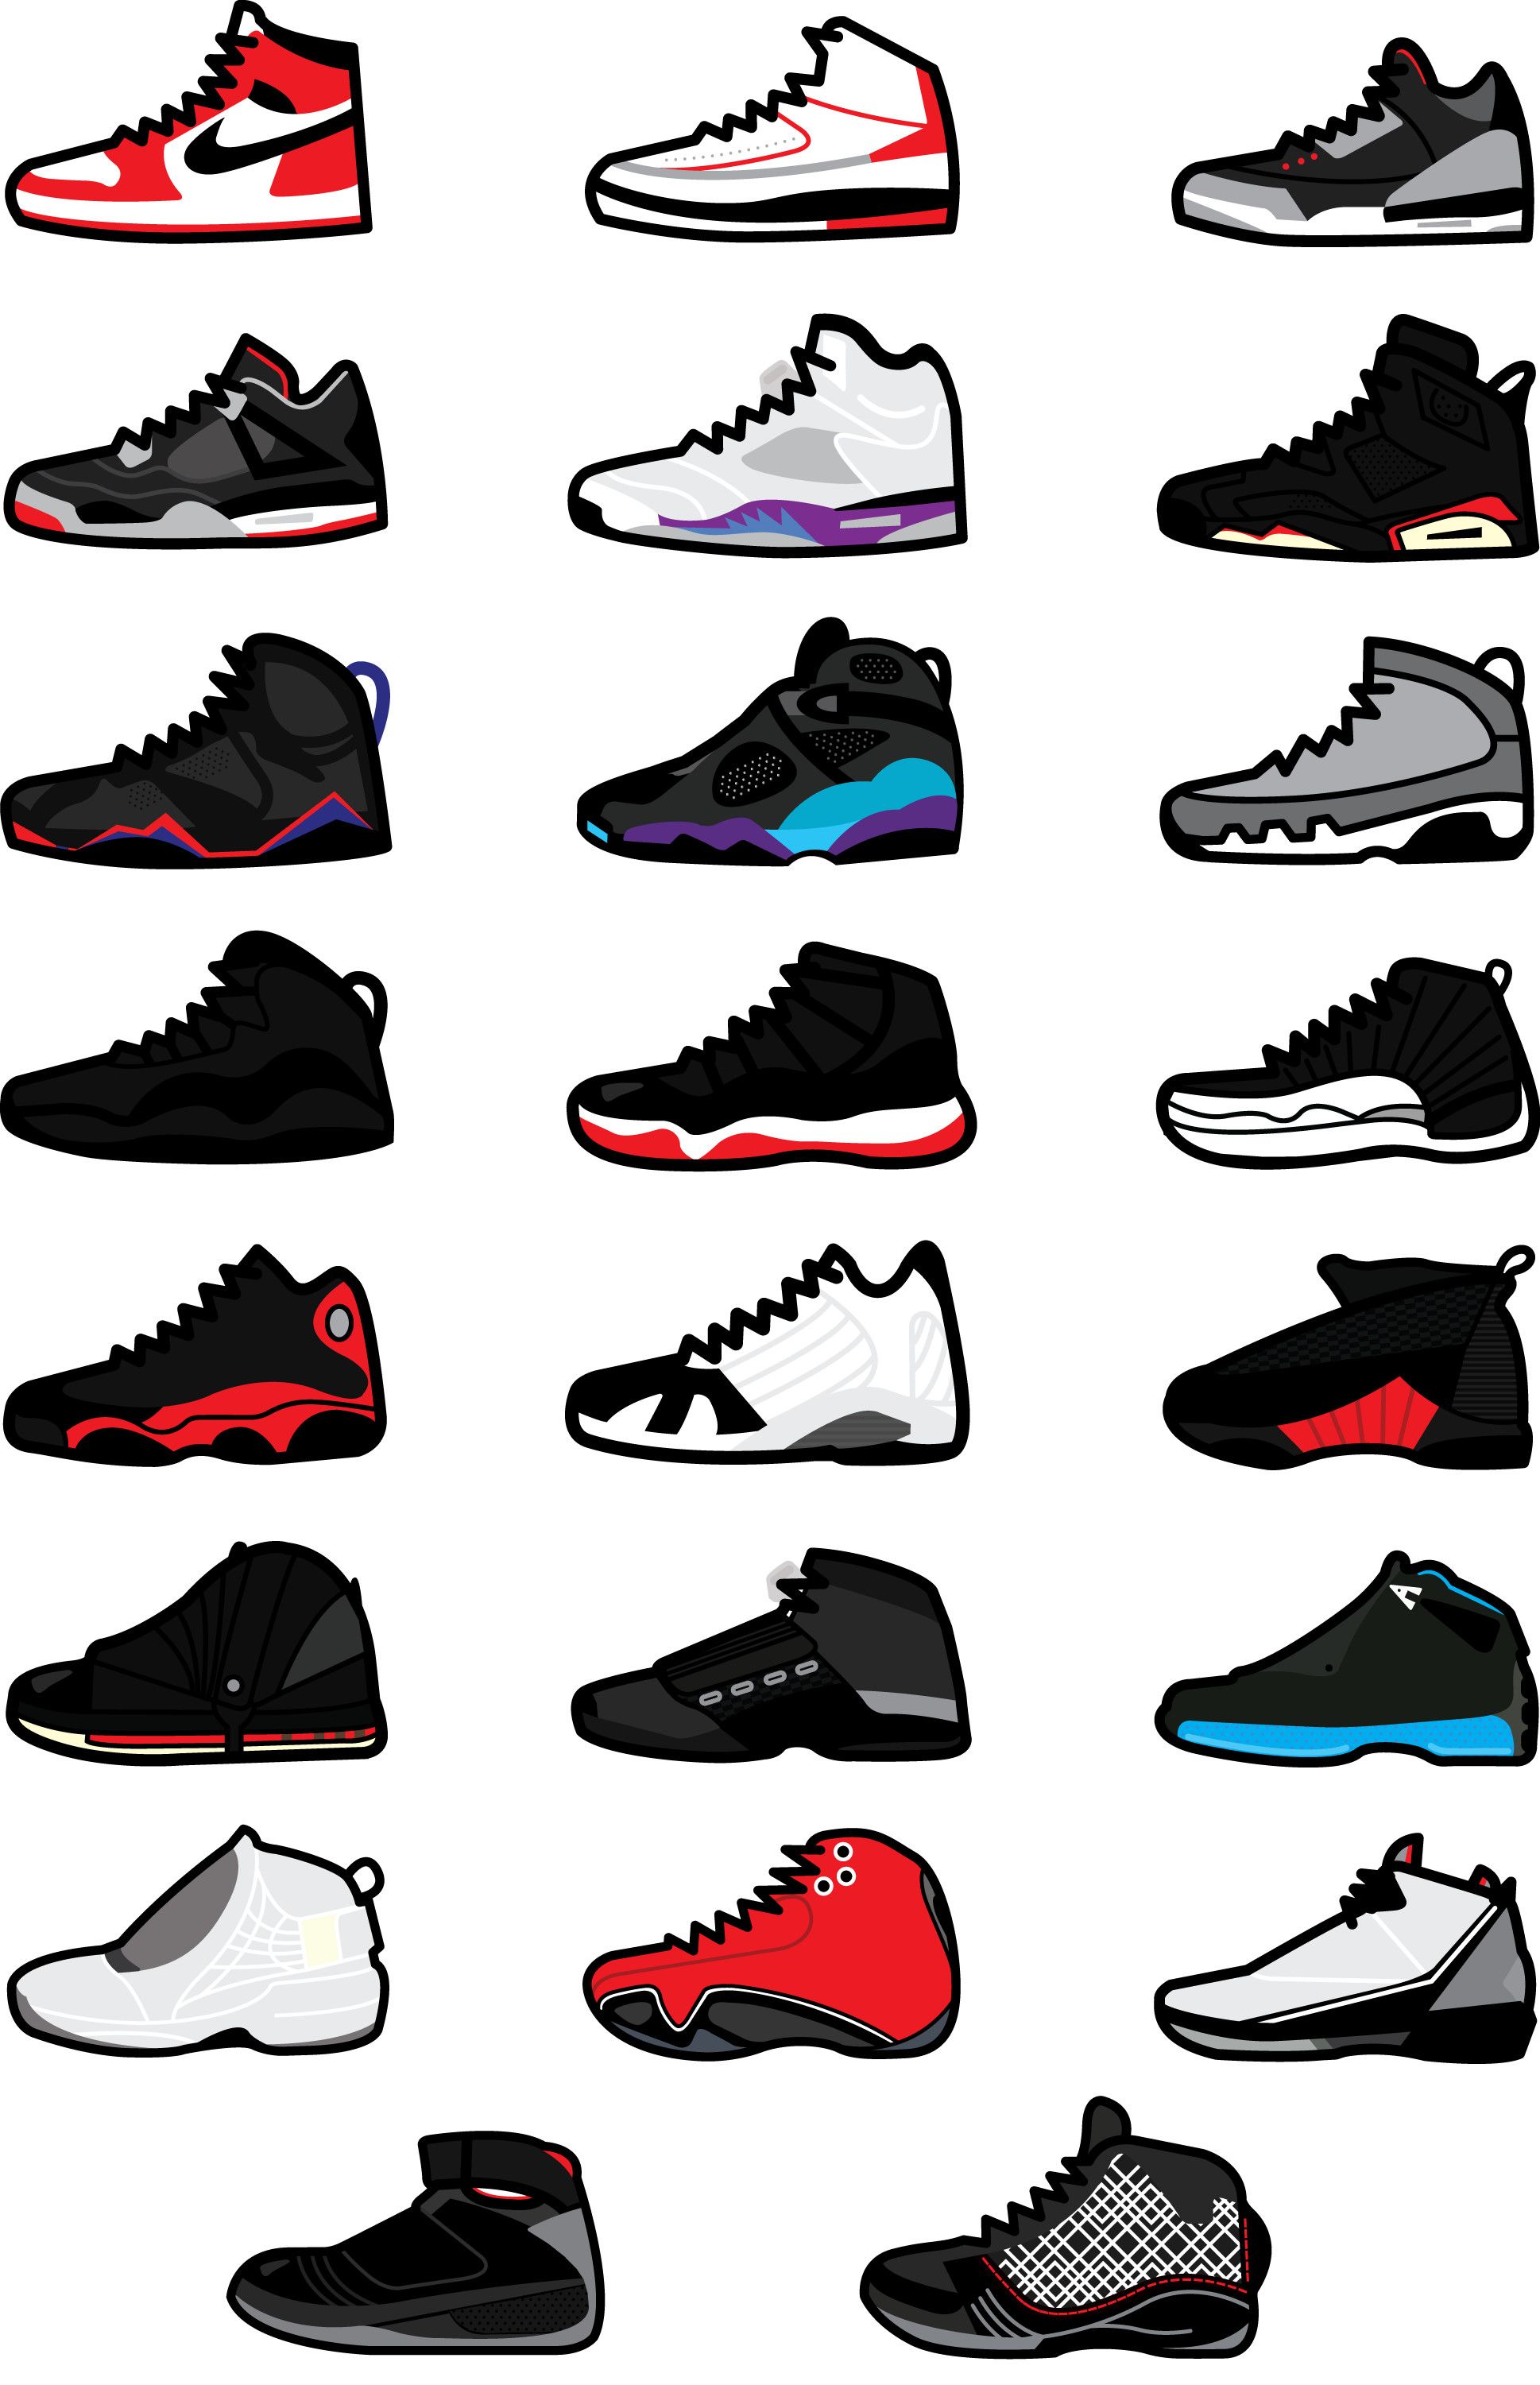 Cartoon Nike Shoes Wallpapers  Top Free Cartoon Nike Shoes Backgrounds   WallpaperAccess